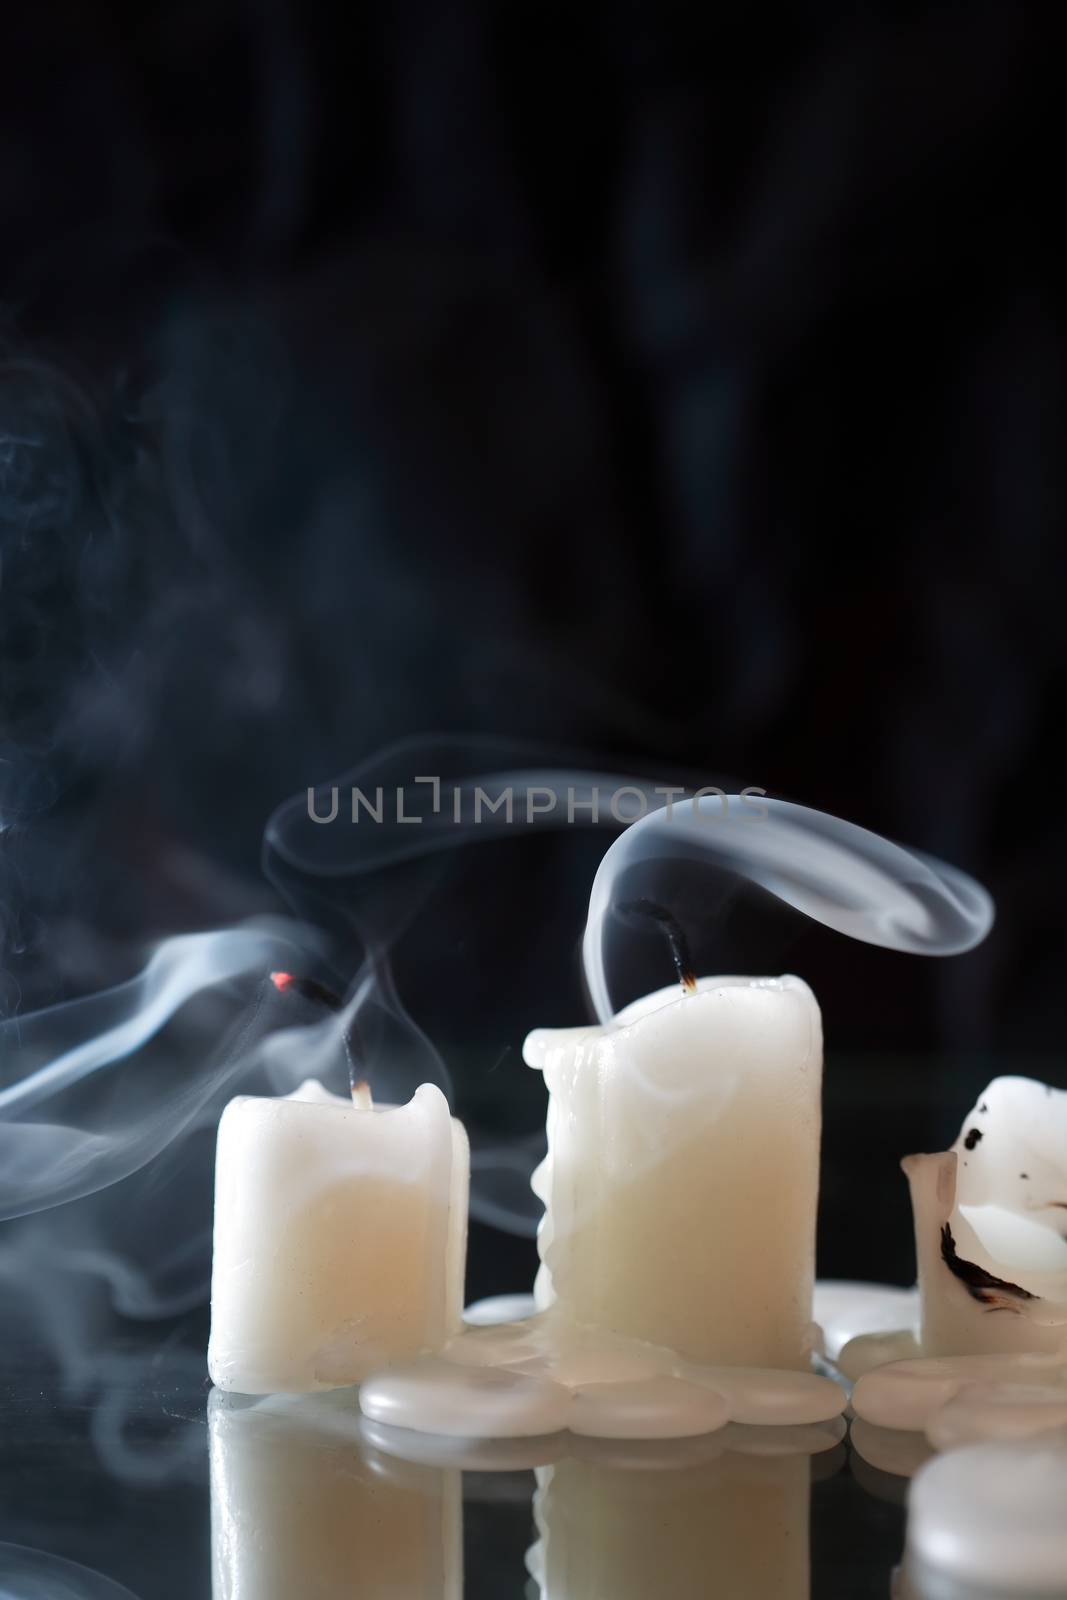 Extinguished Candles On Dark by kvkirillov